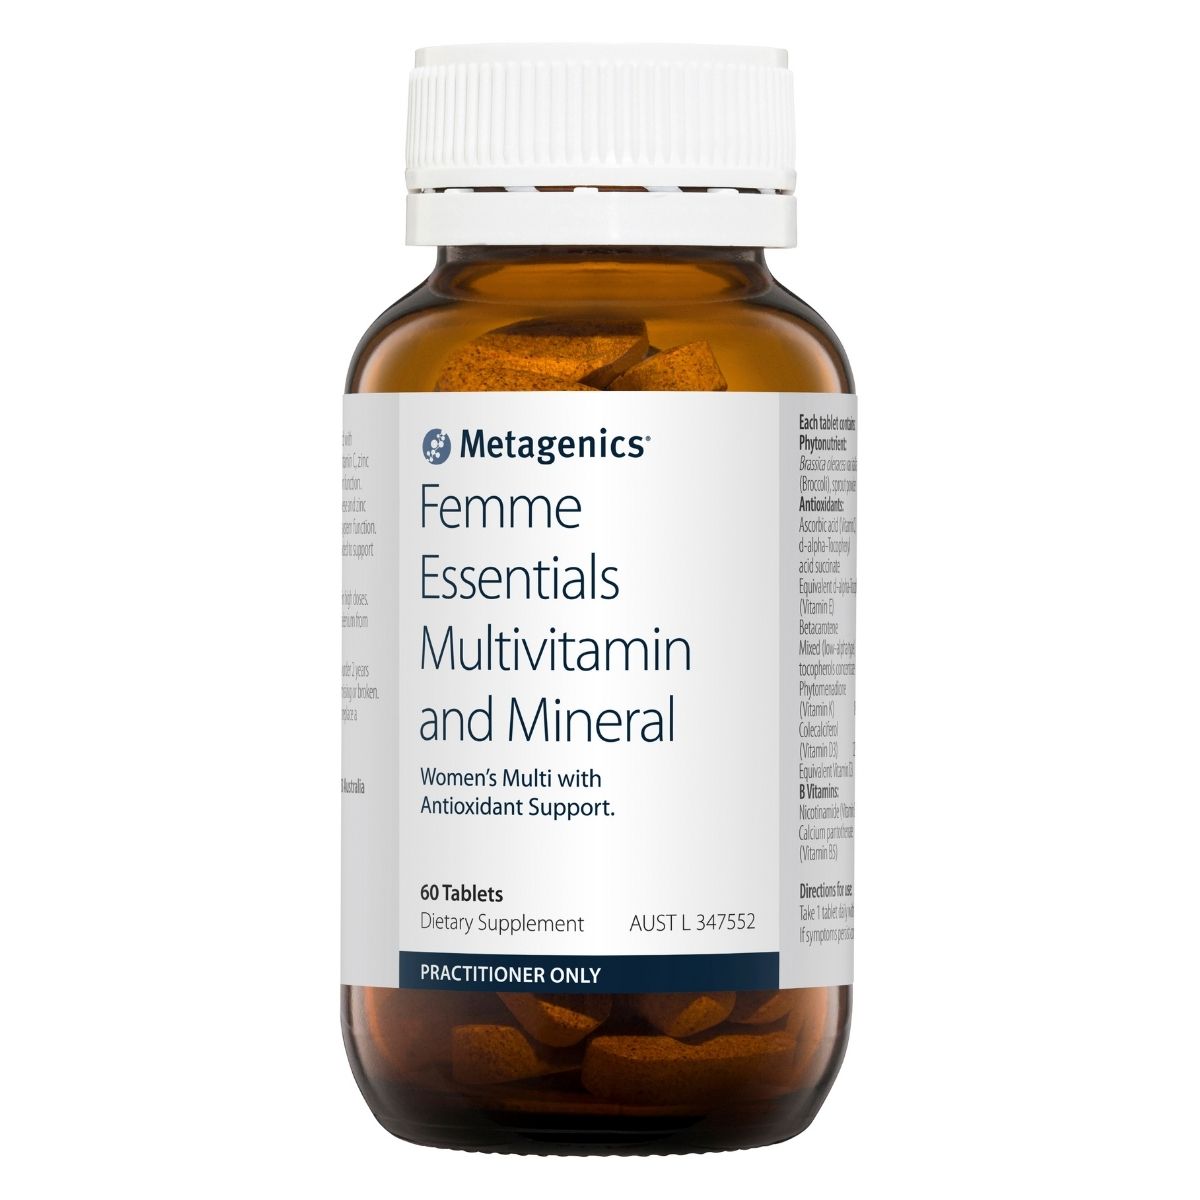 Metagenics Femme Essentials Multivitamin and Mineral